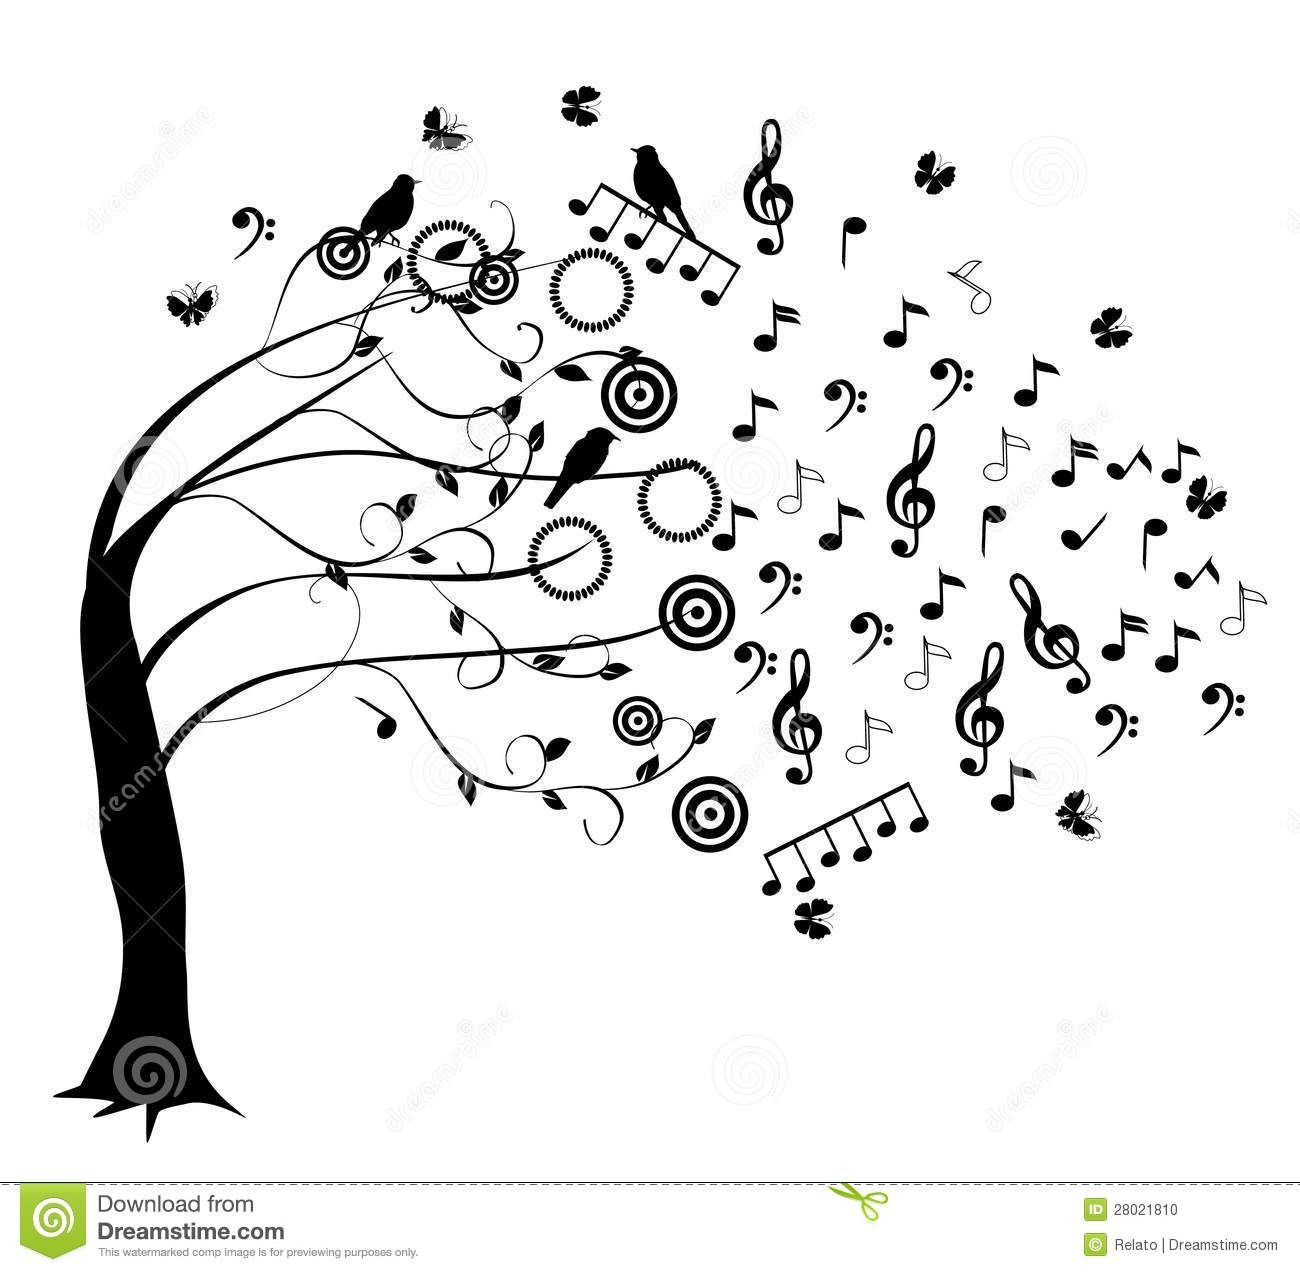 Music note tree.